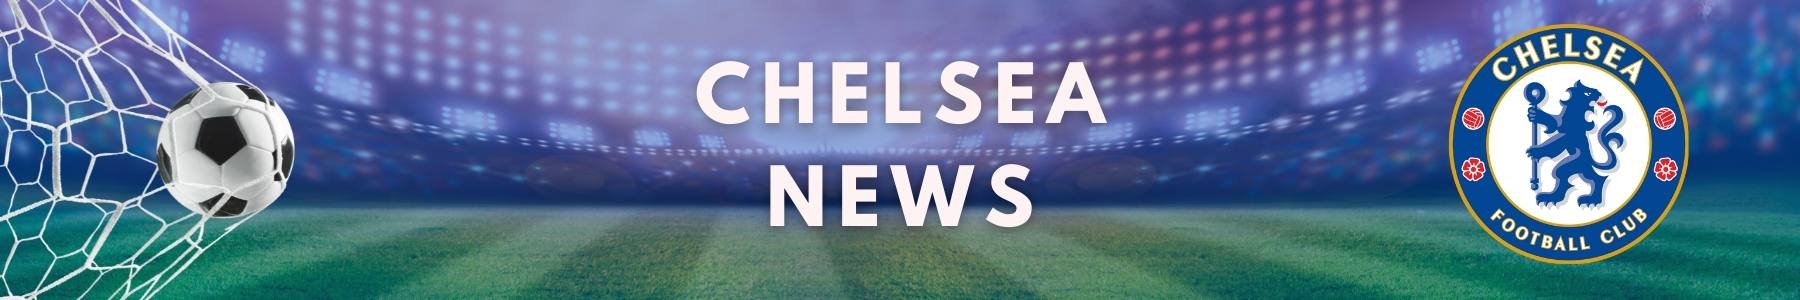 Chelsea - Latest News